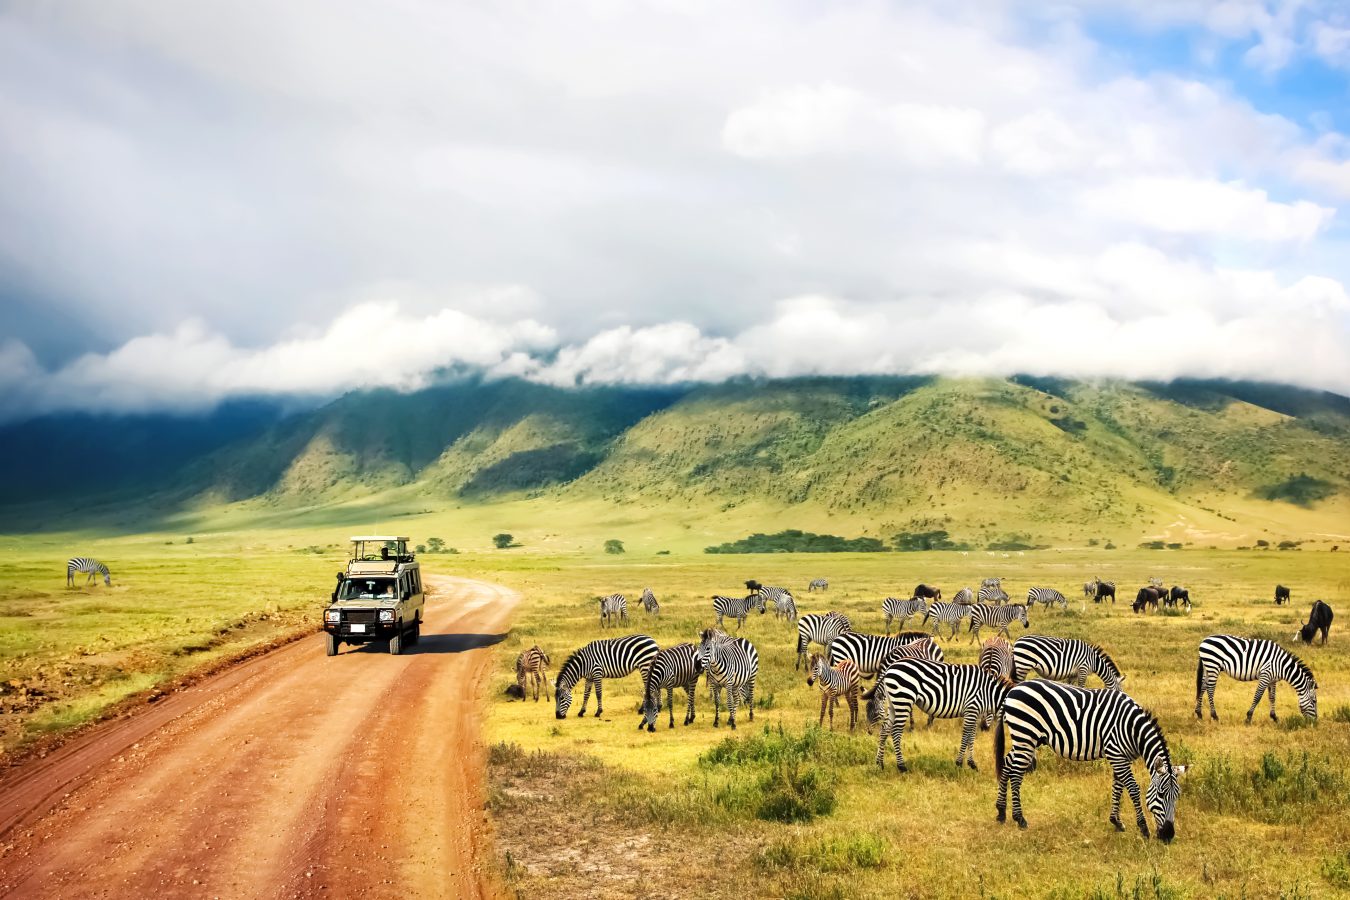 Safari car driving past a herd of zebras in Tanzania.